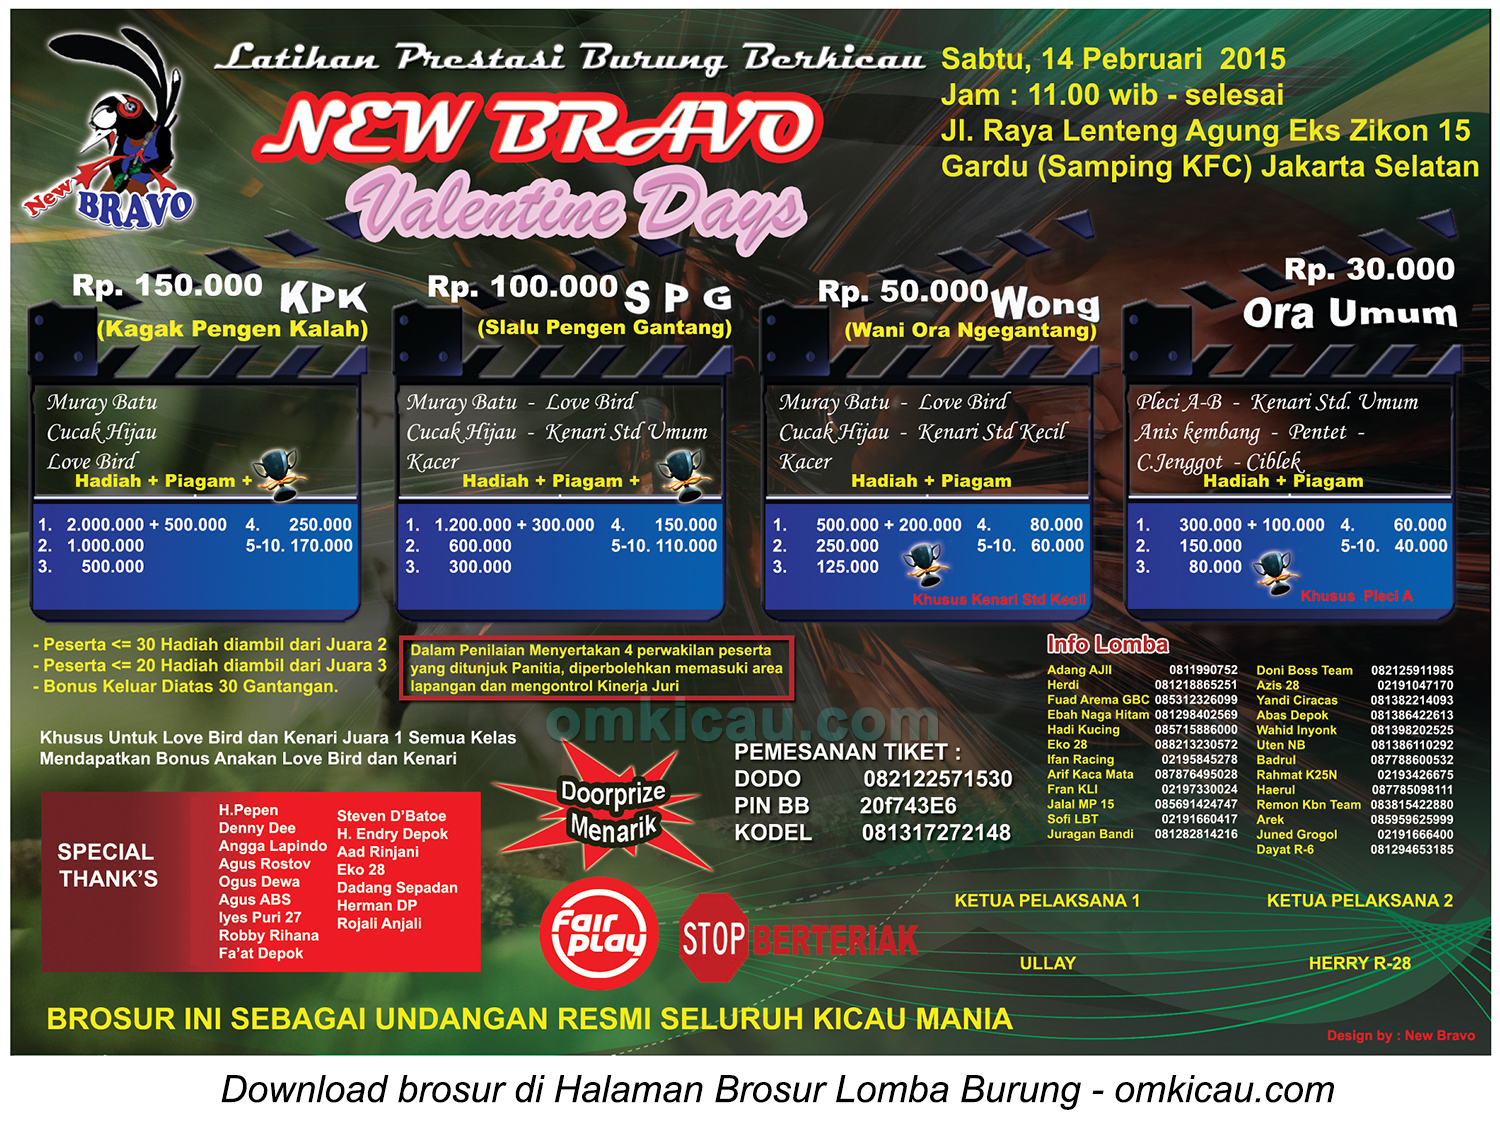 Brosur Latpres New Bravo Valentine Days, Jakarta Selatan, 14 Februari 2015